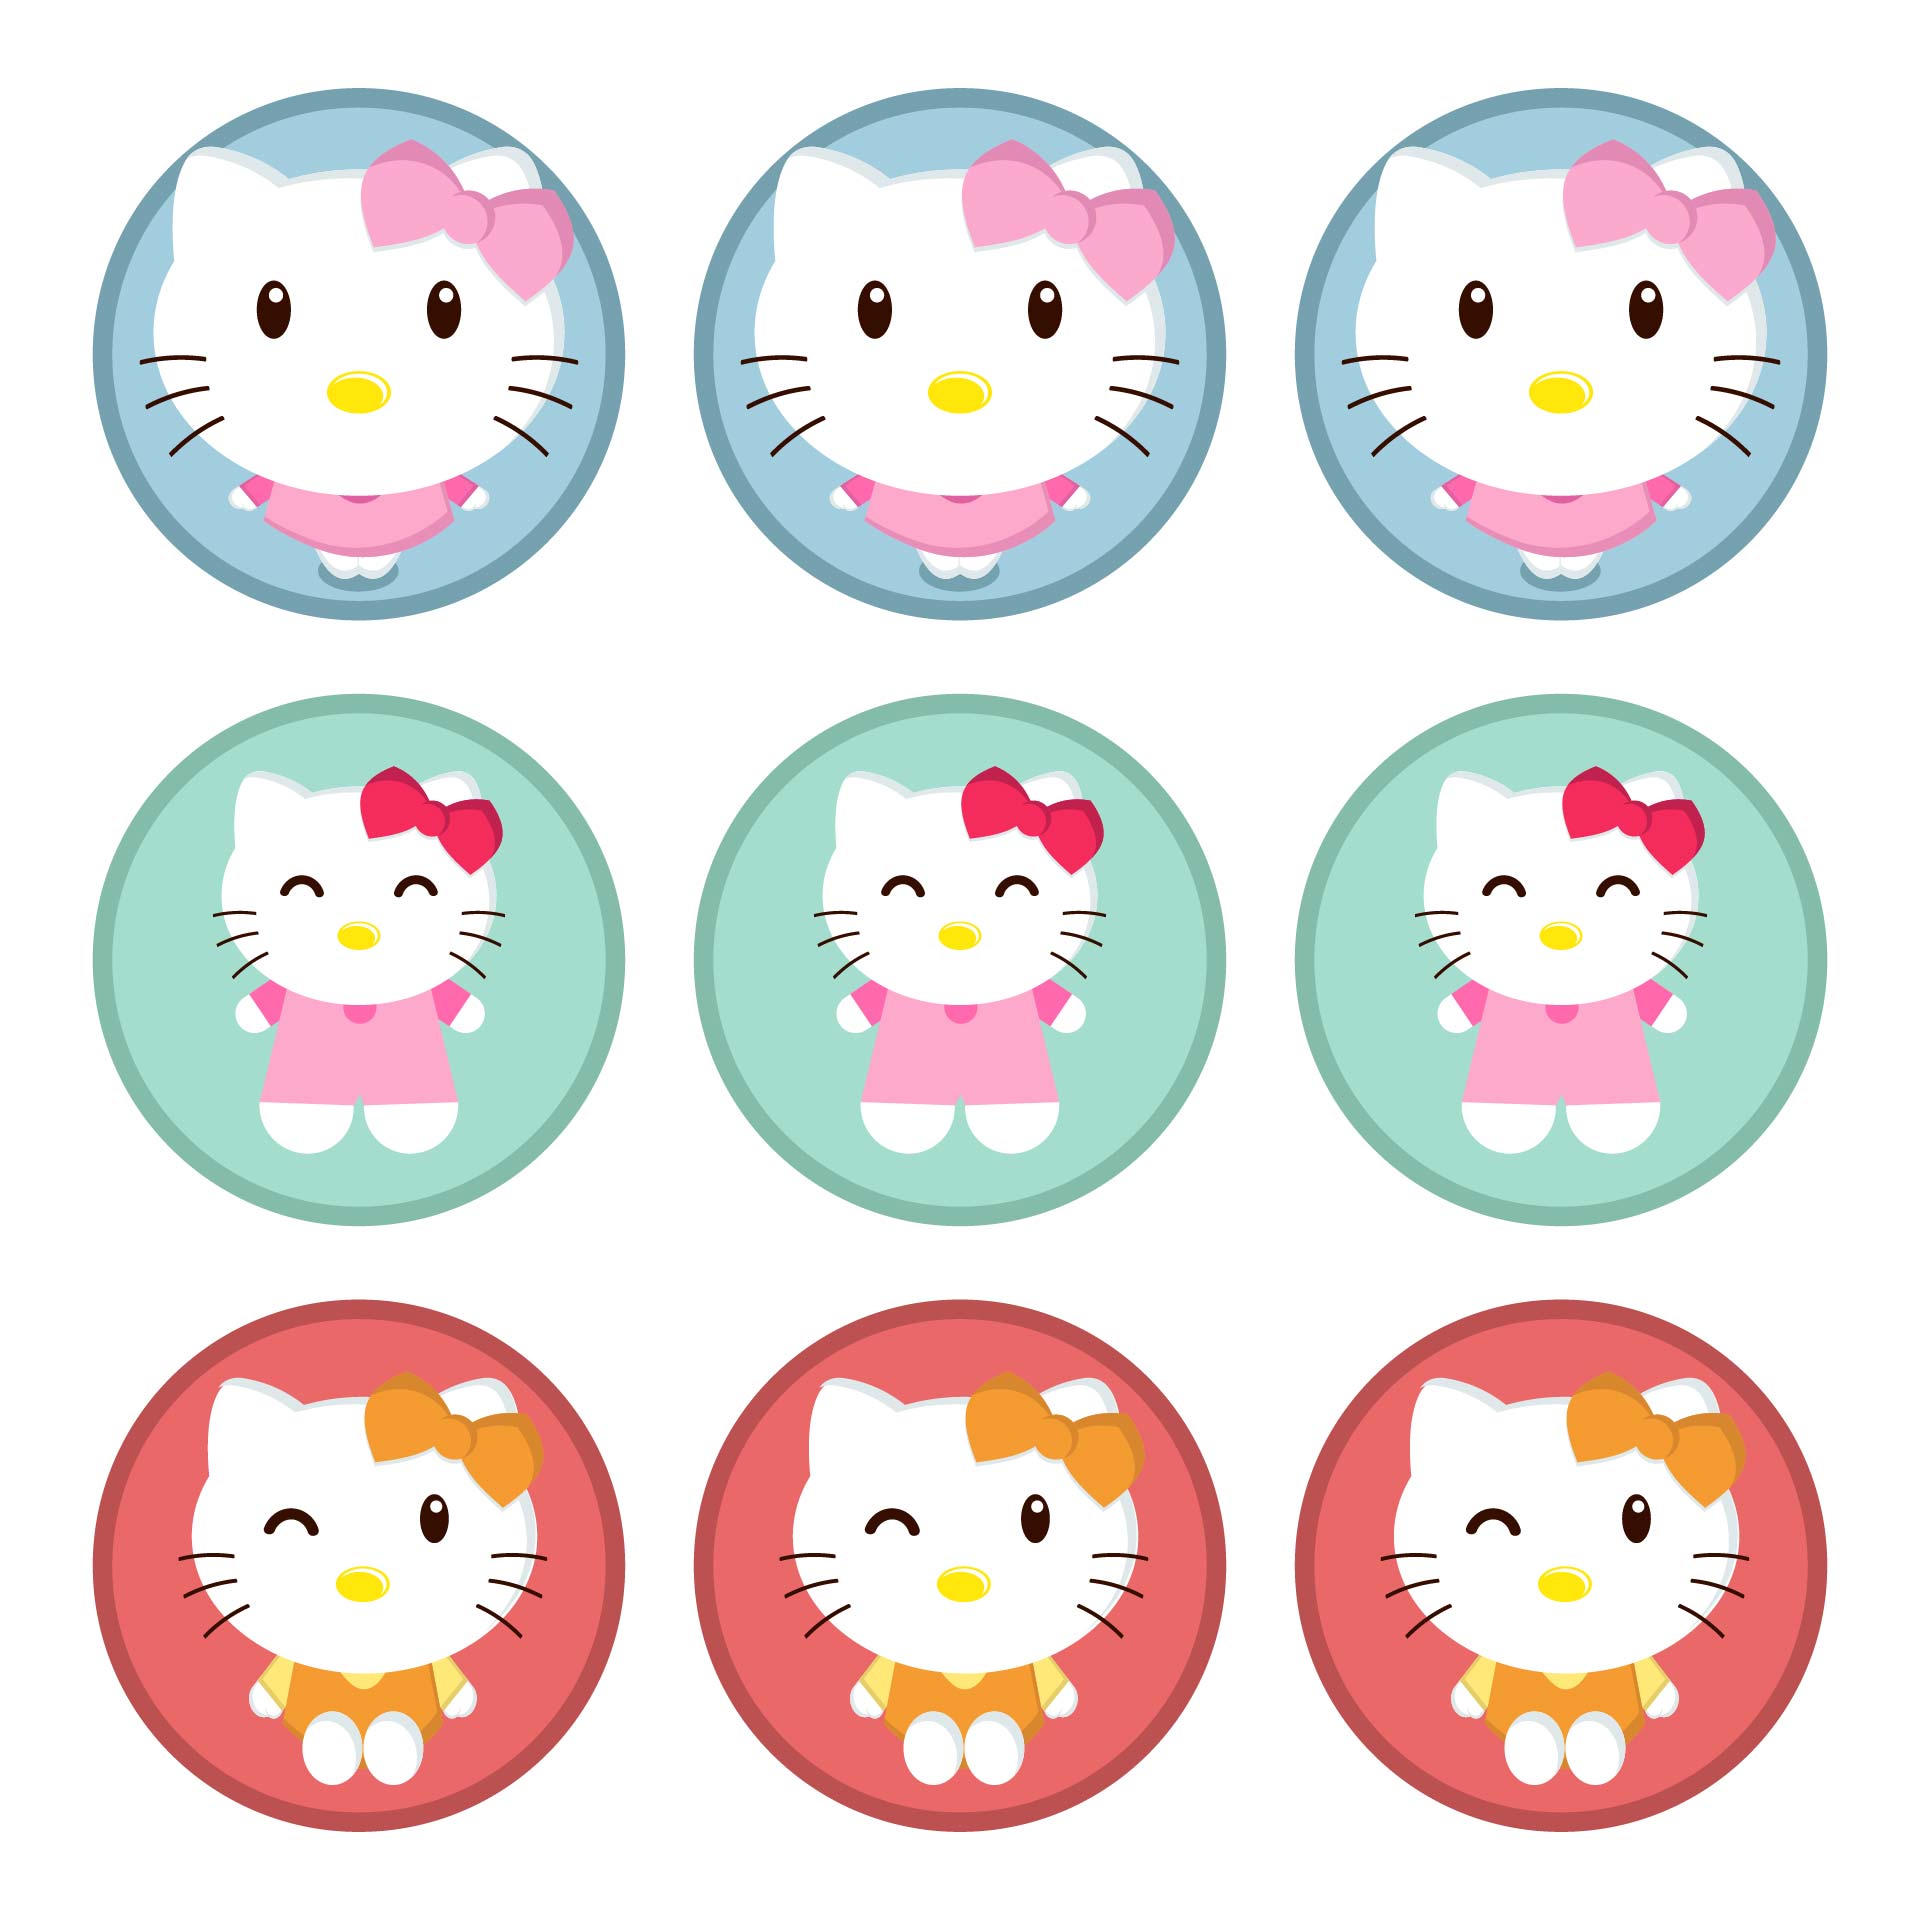 Pretty Hello Kitty Party Ideas & Decorations Printable